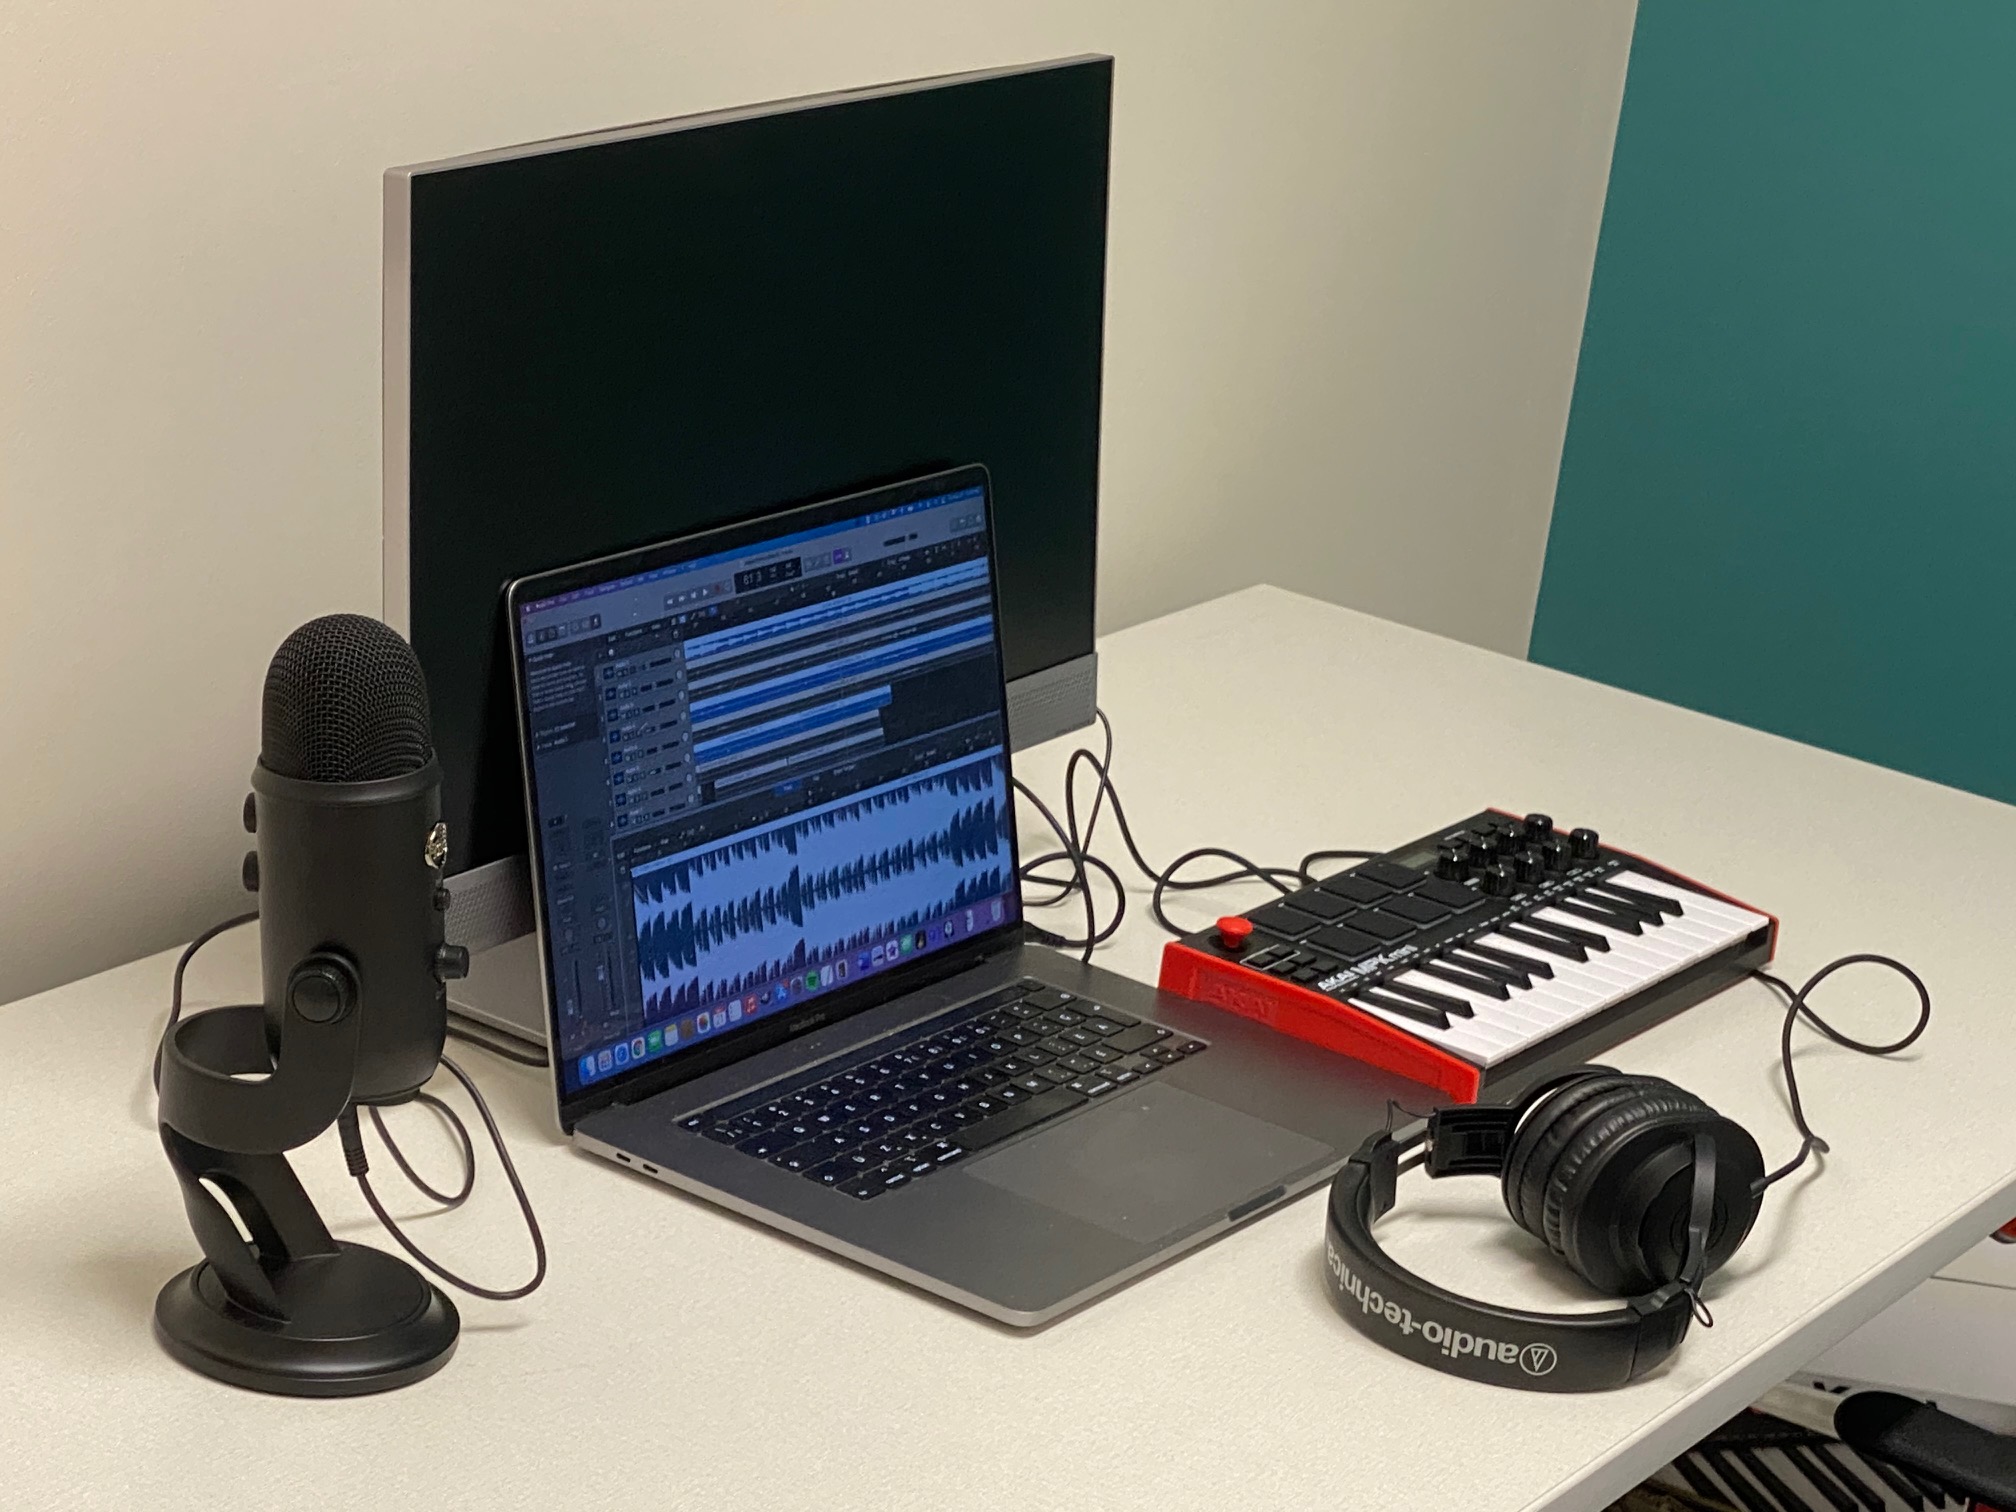 Audio Studio